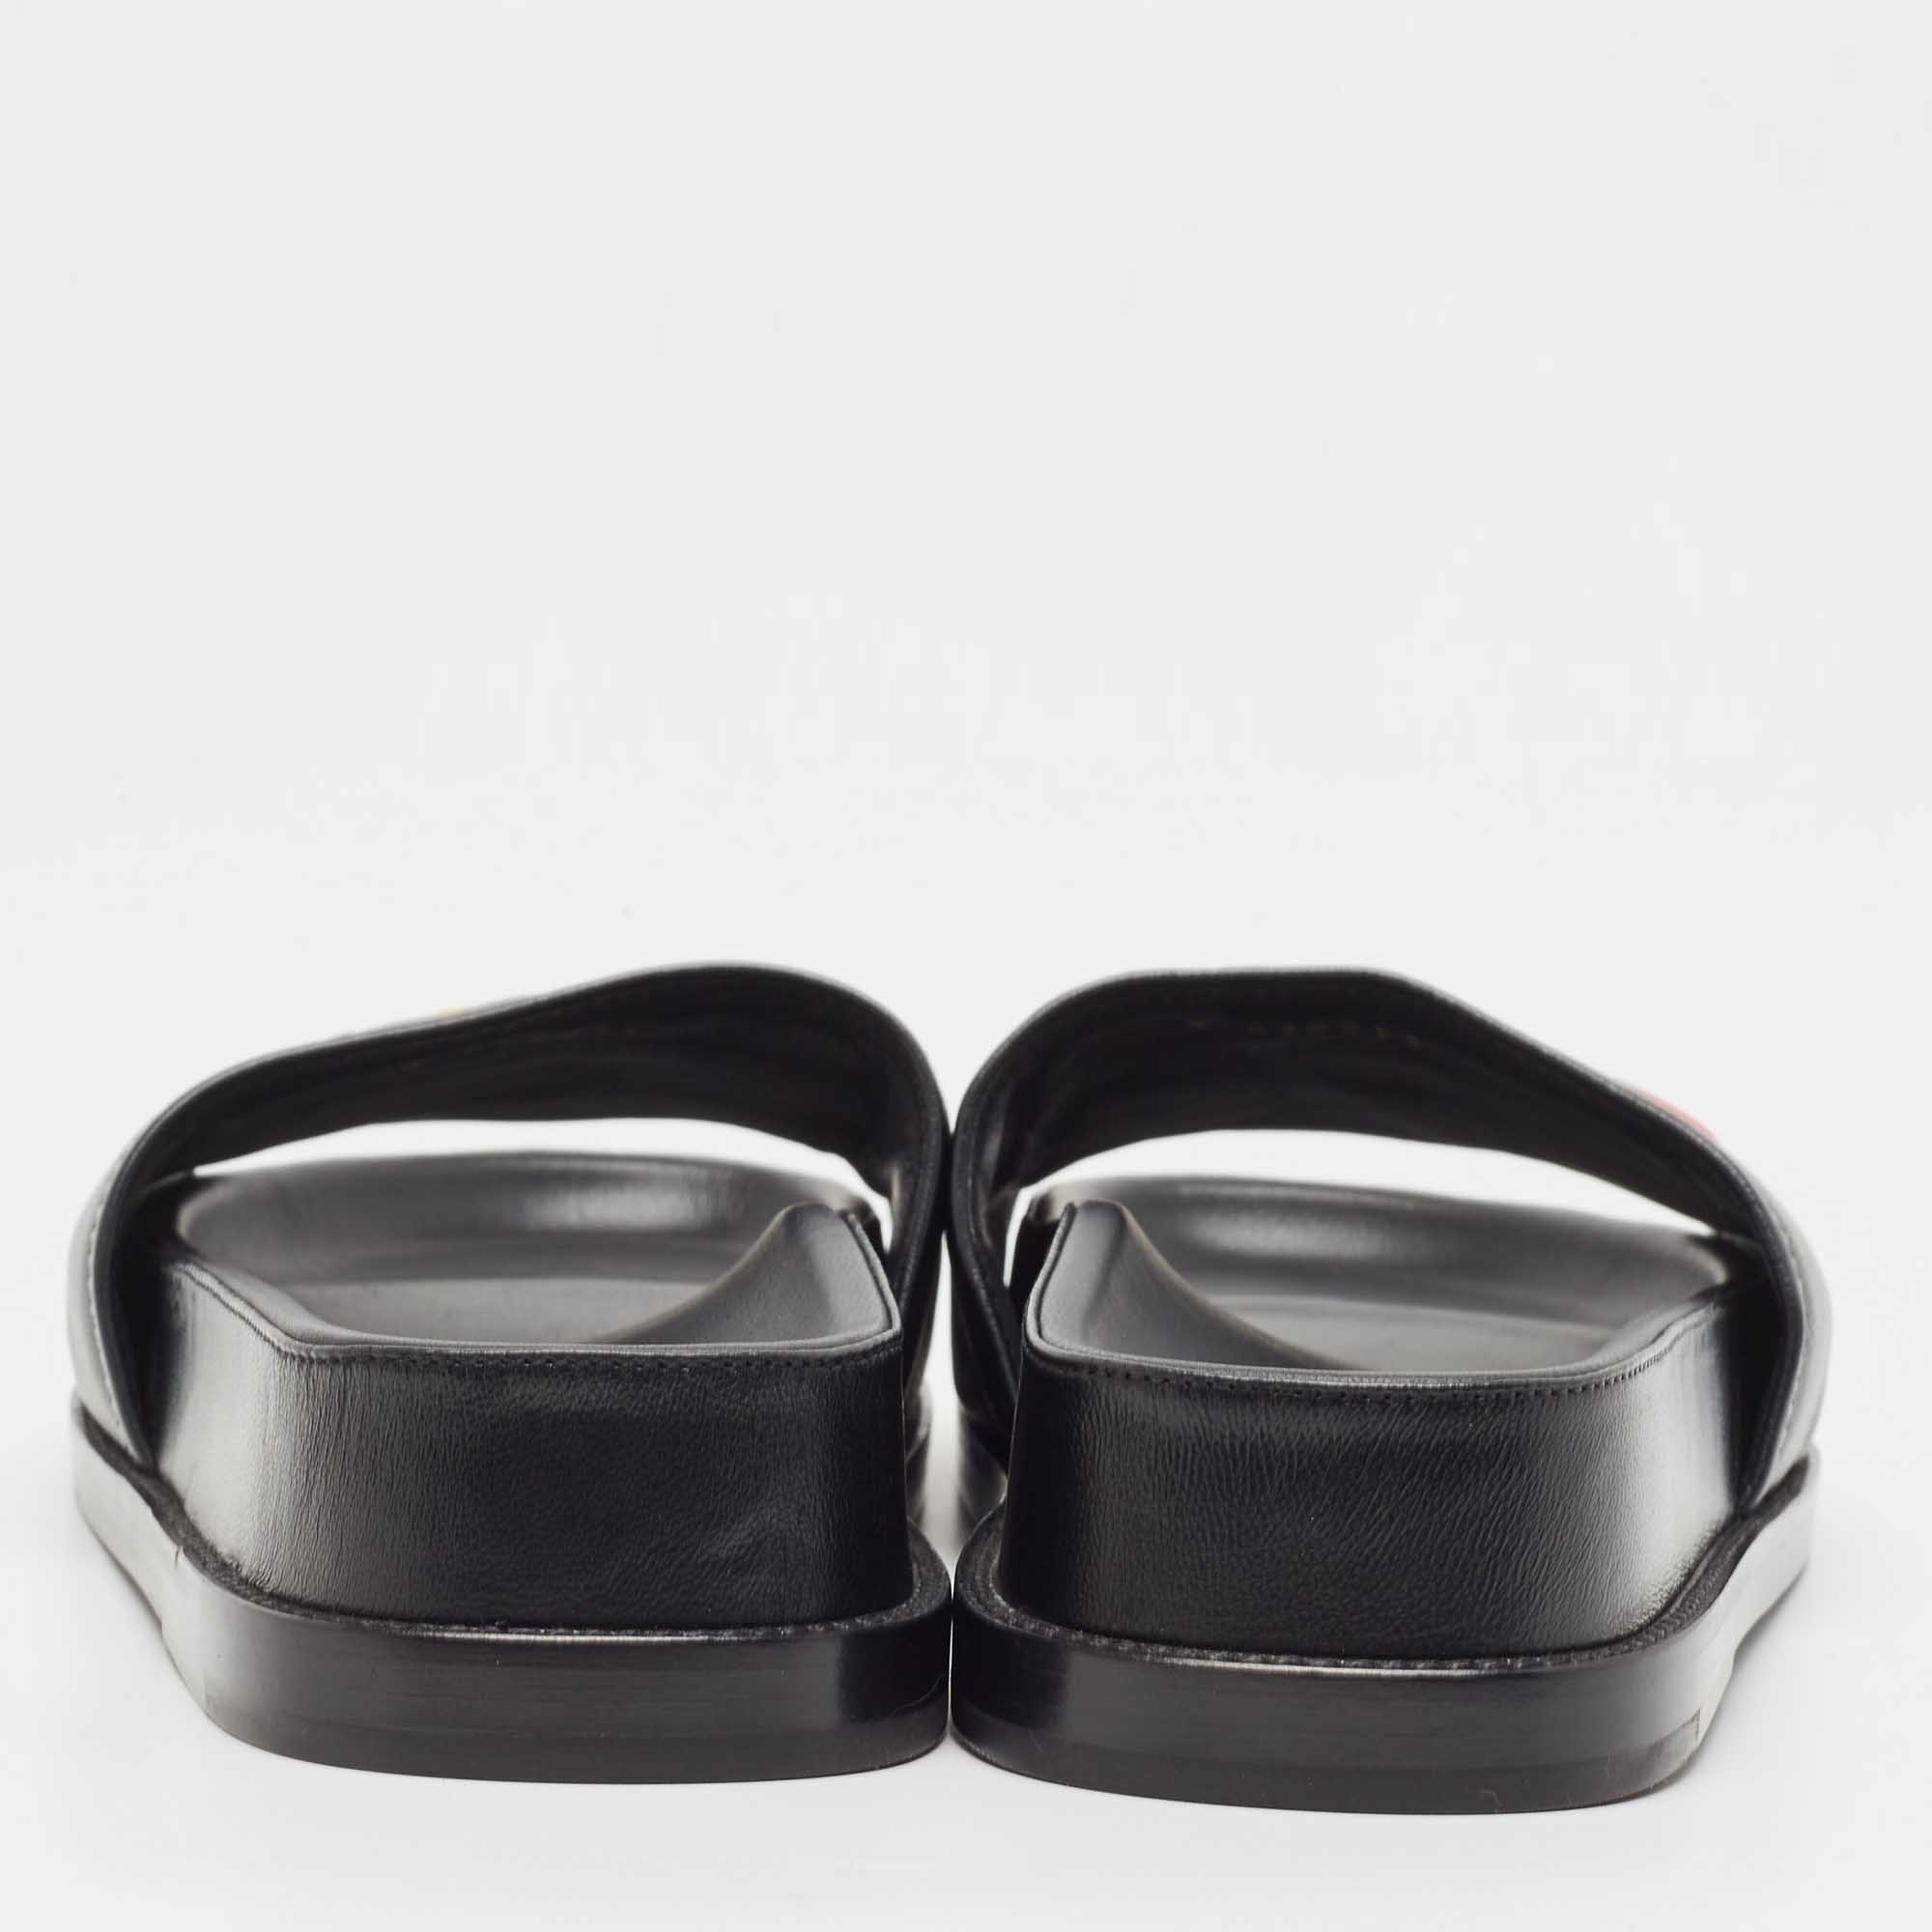 Chanel Black Leather CHA NEL Letter Logo Flat Slides Size 40